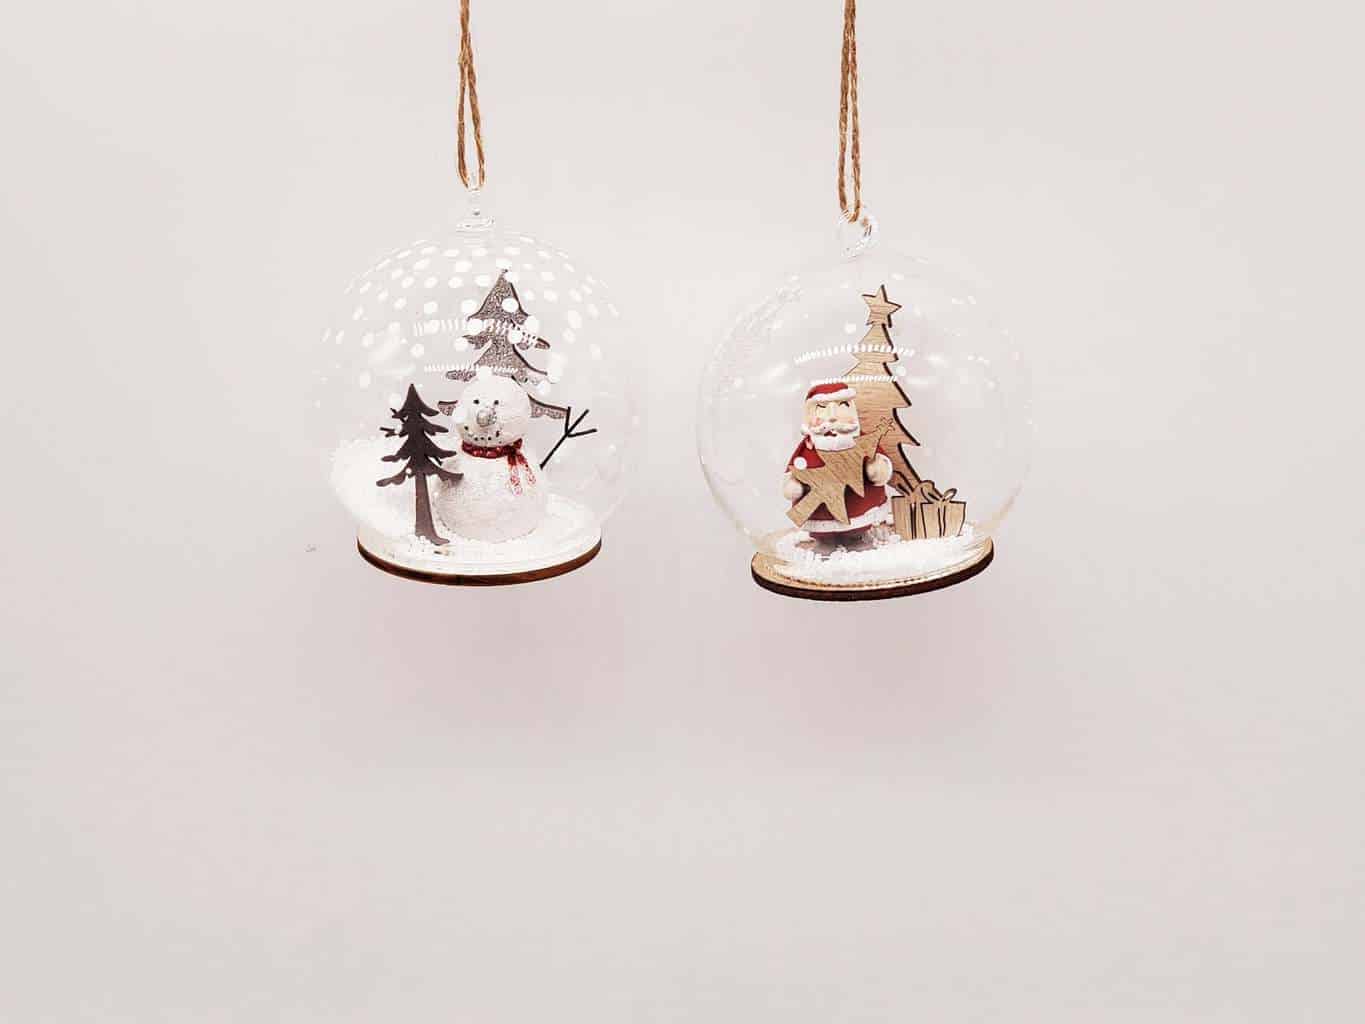 Details about   2 Vintage Handmade Christmas Ornaments Gold & Bronze Tassels w 3 Glass Balls 